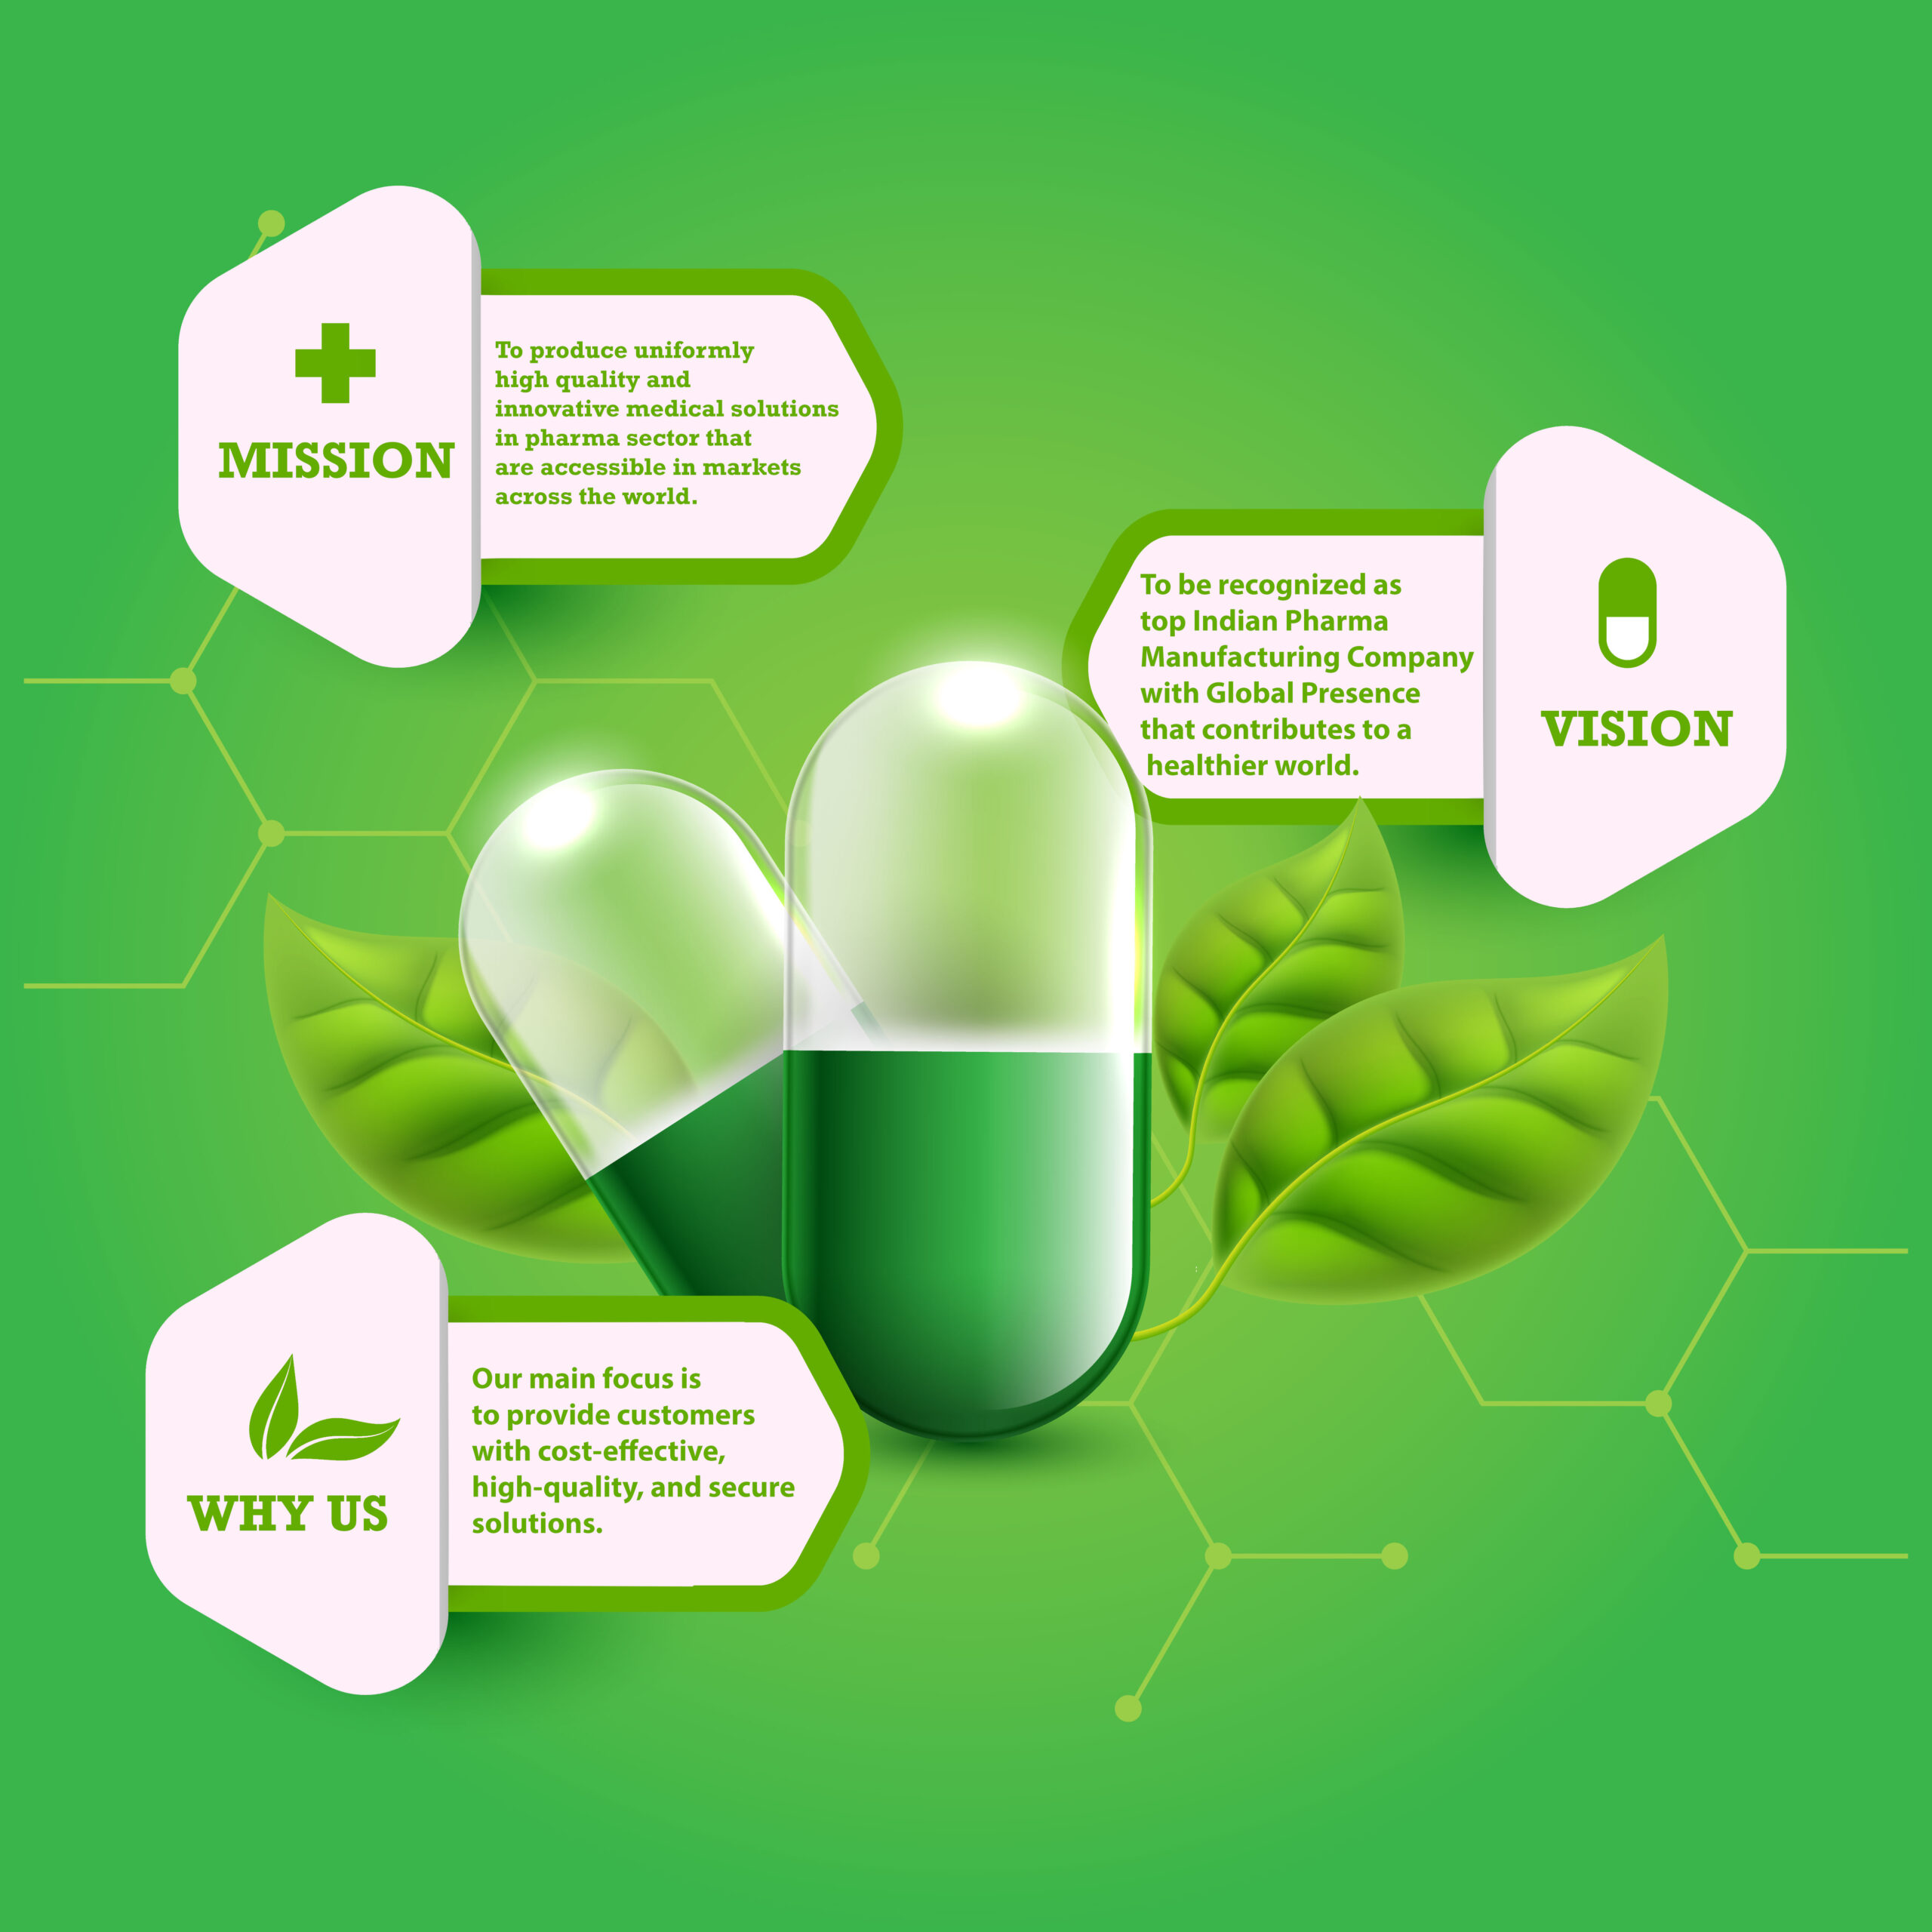 Herb capsule, nutritional supplement, benefits pills